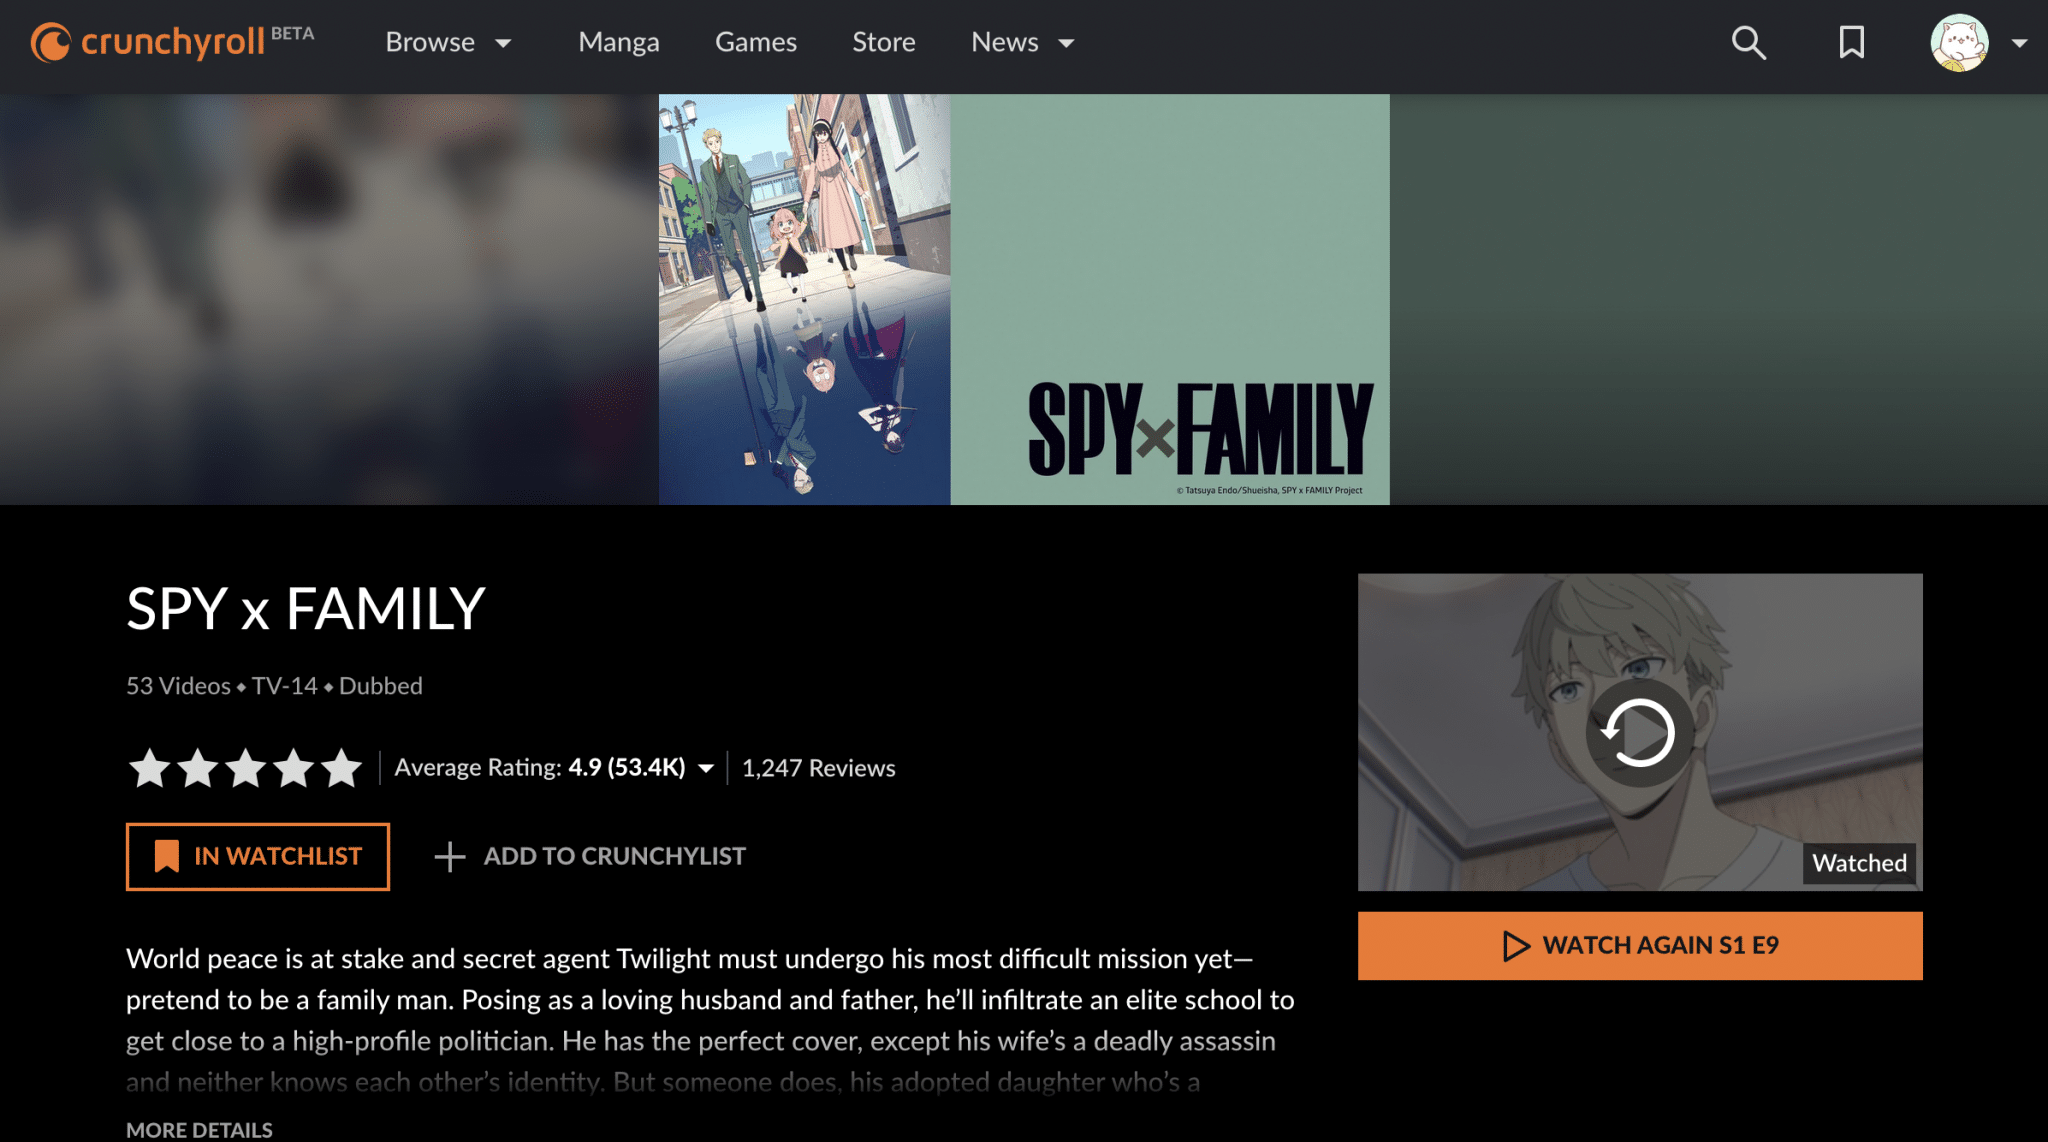 Spy x Family at Crunchyroll, Tatsuya Endo/Shueisha, SPY x FAMILY Project